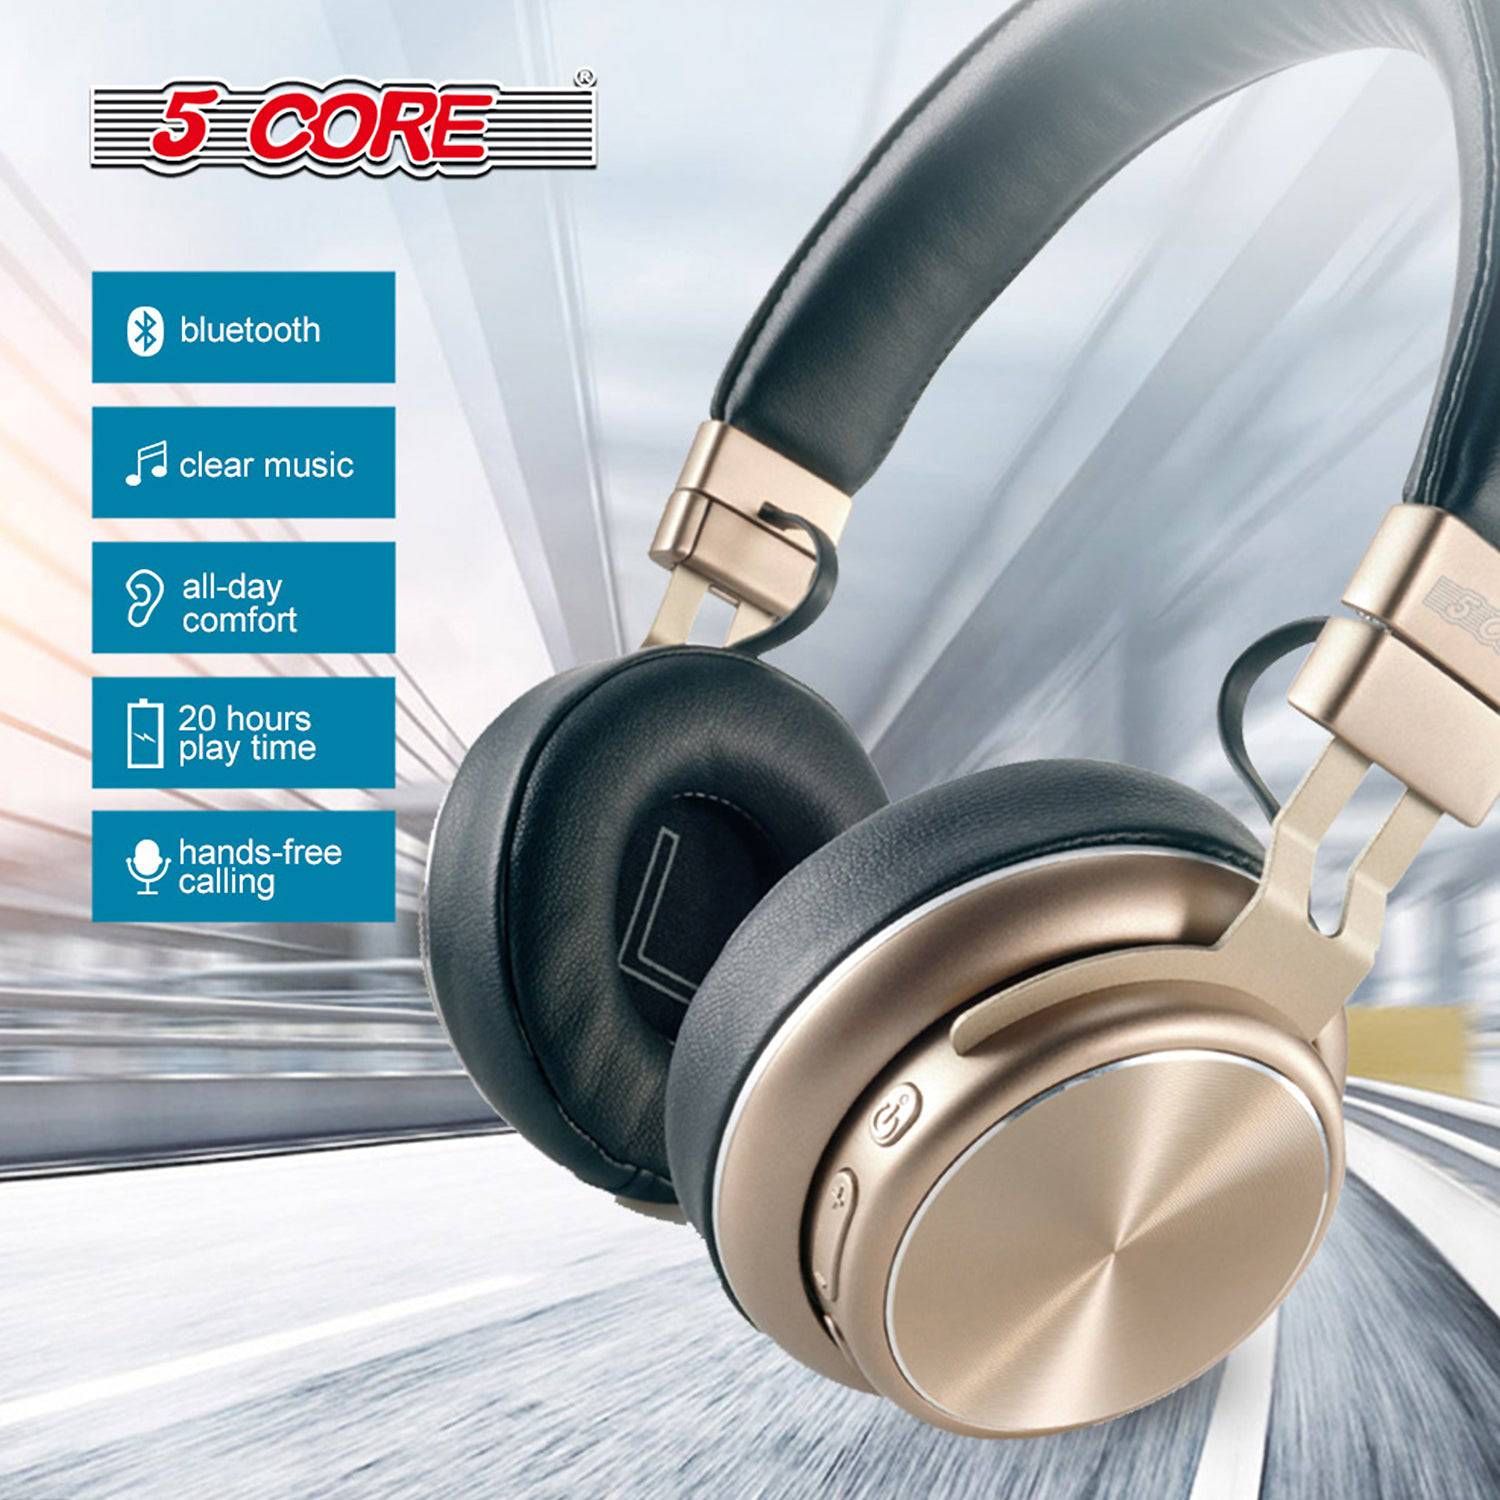 5Core 5Core 5.0 Headset Bluetooth Mic 13 inbuilt Headphone Wireless Gold Ear G Premium HEADPHONE Over